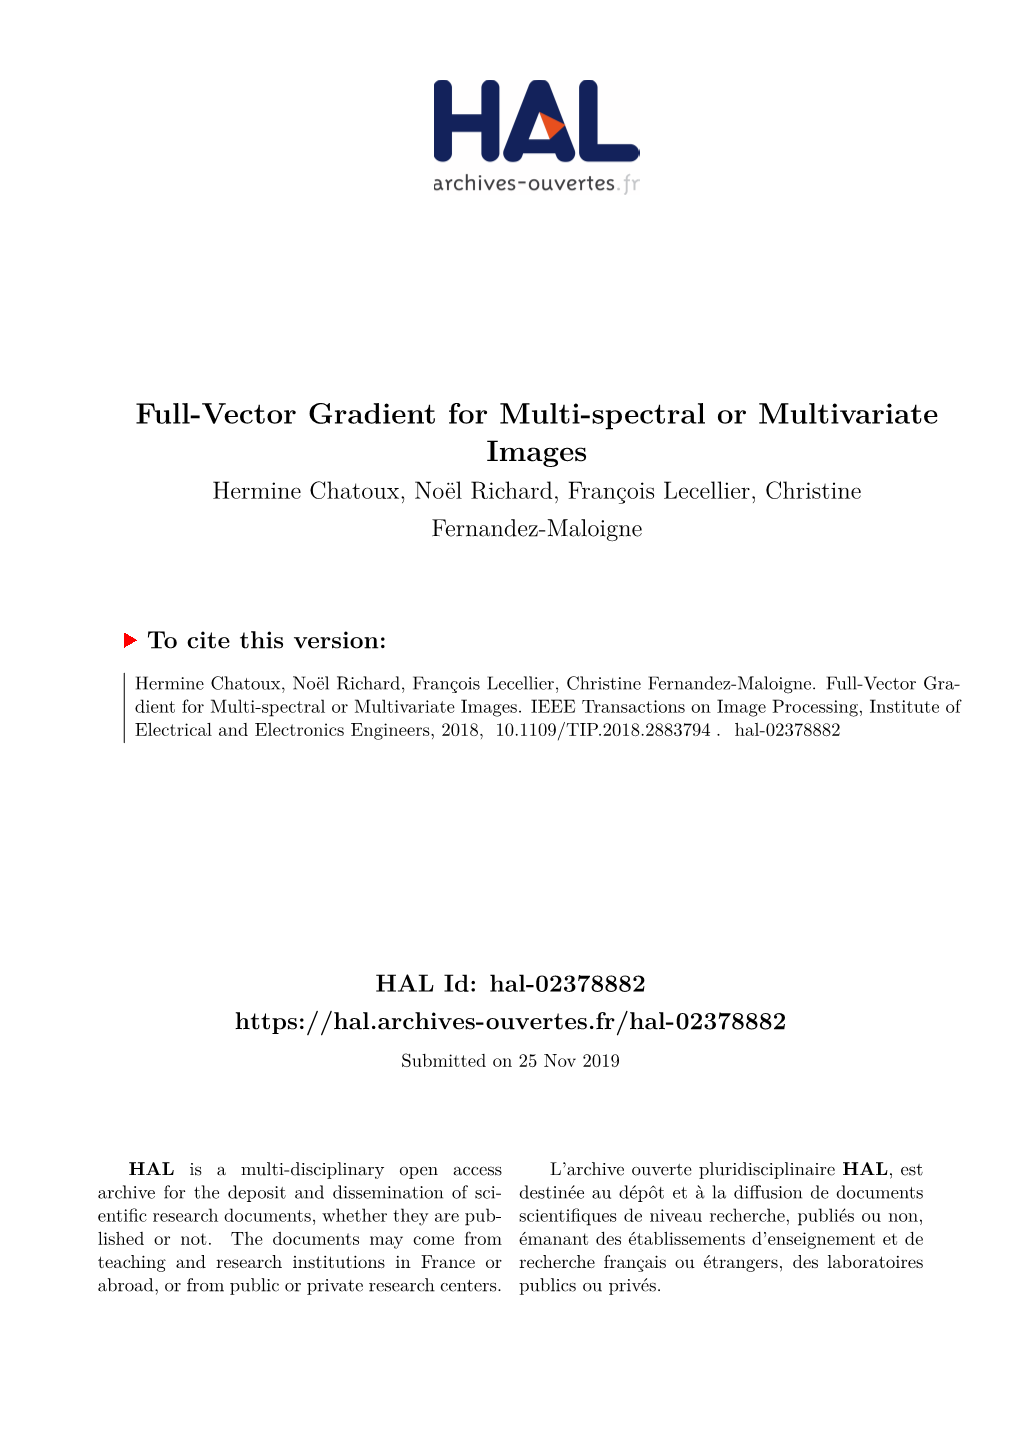 Full-Vector Gradient for Multi-Spectral Or Multivariate Images Hermine Chatoux, Noël Richard, François Lecellier, Christine Fernandez-Maloigne